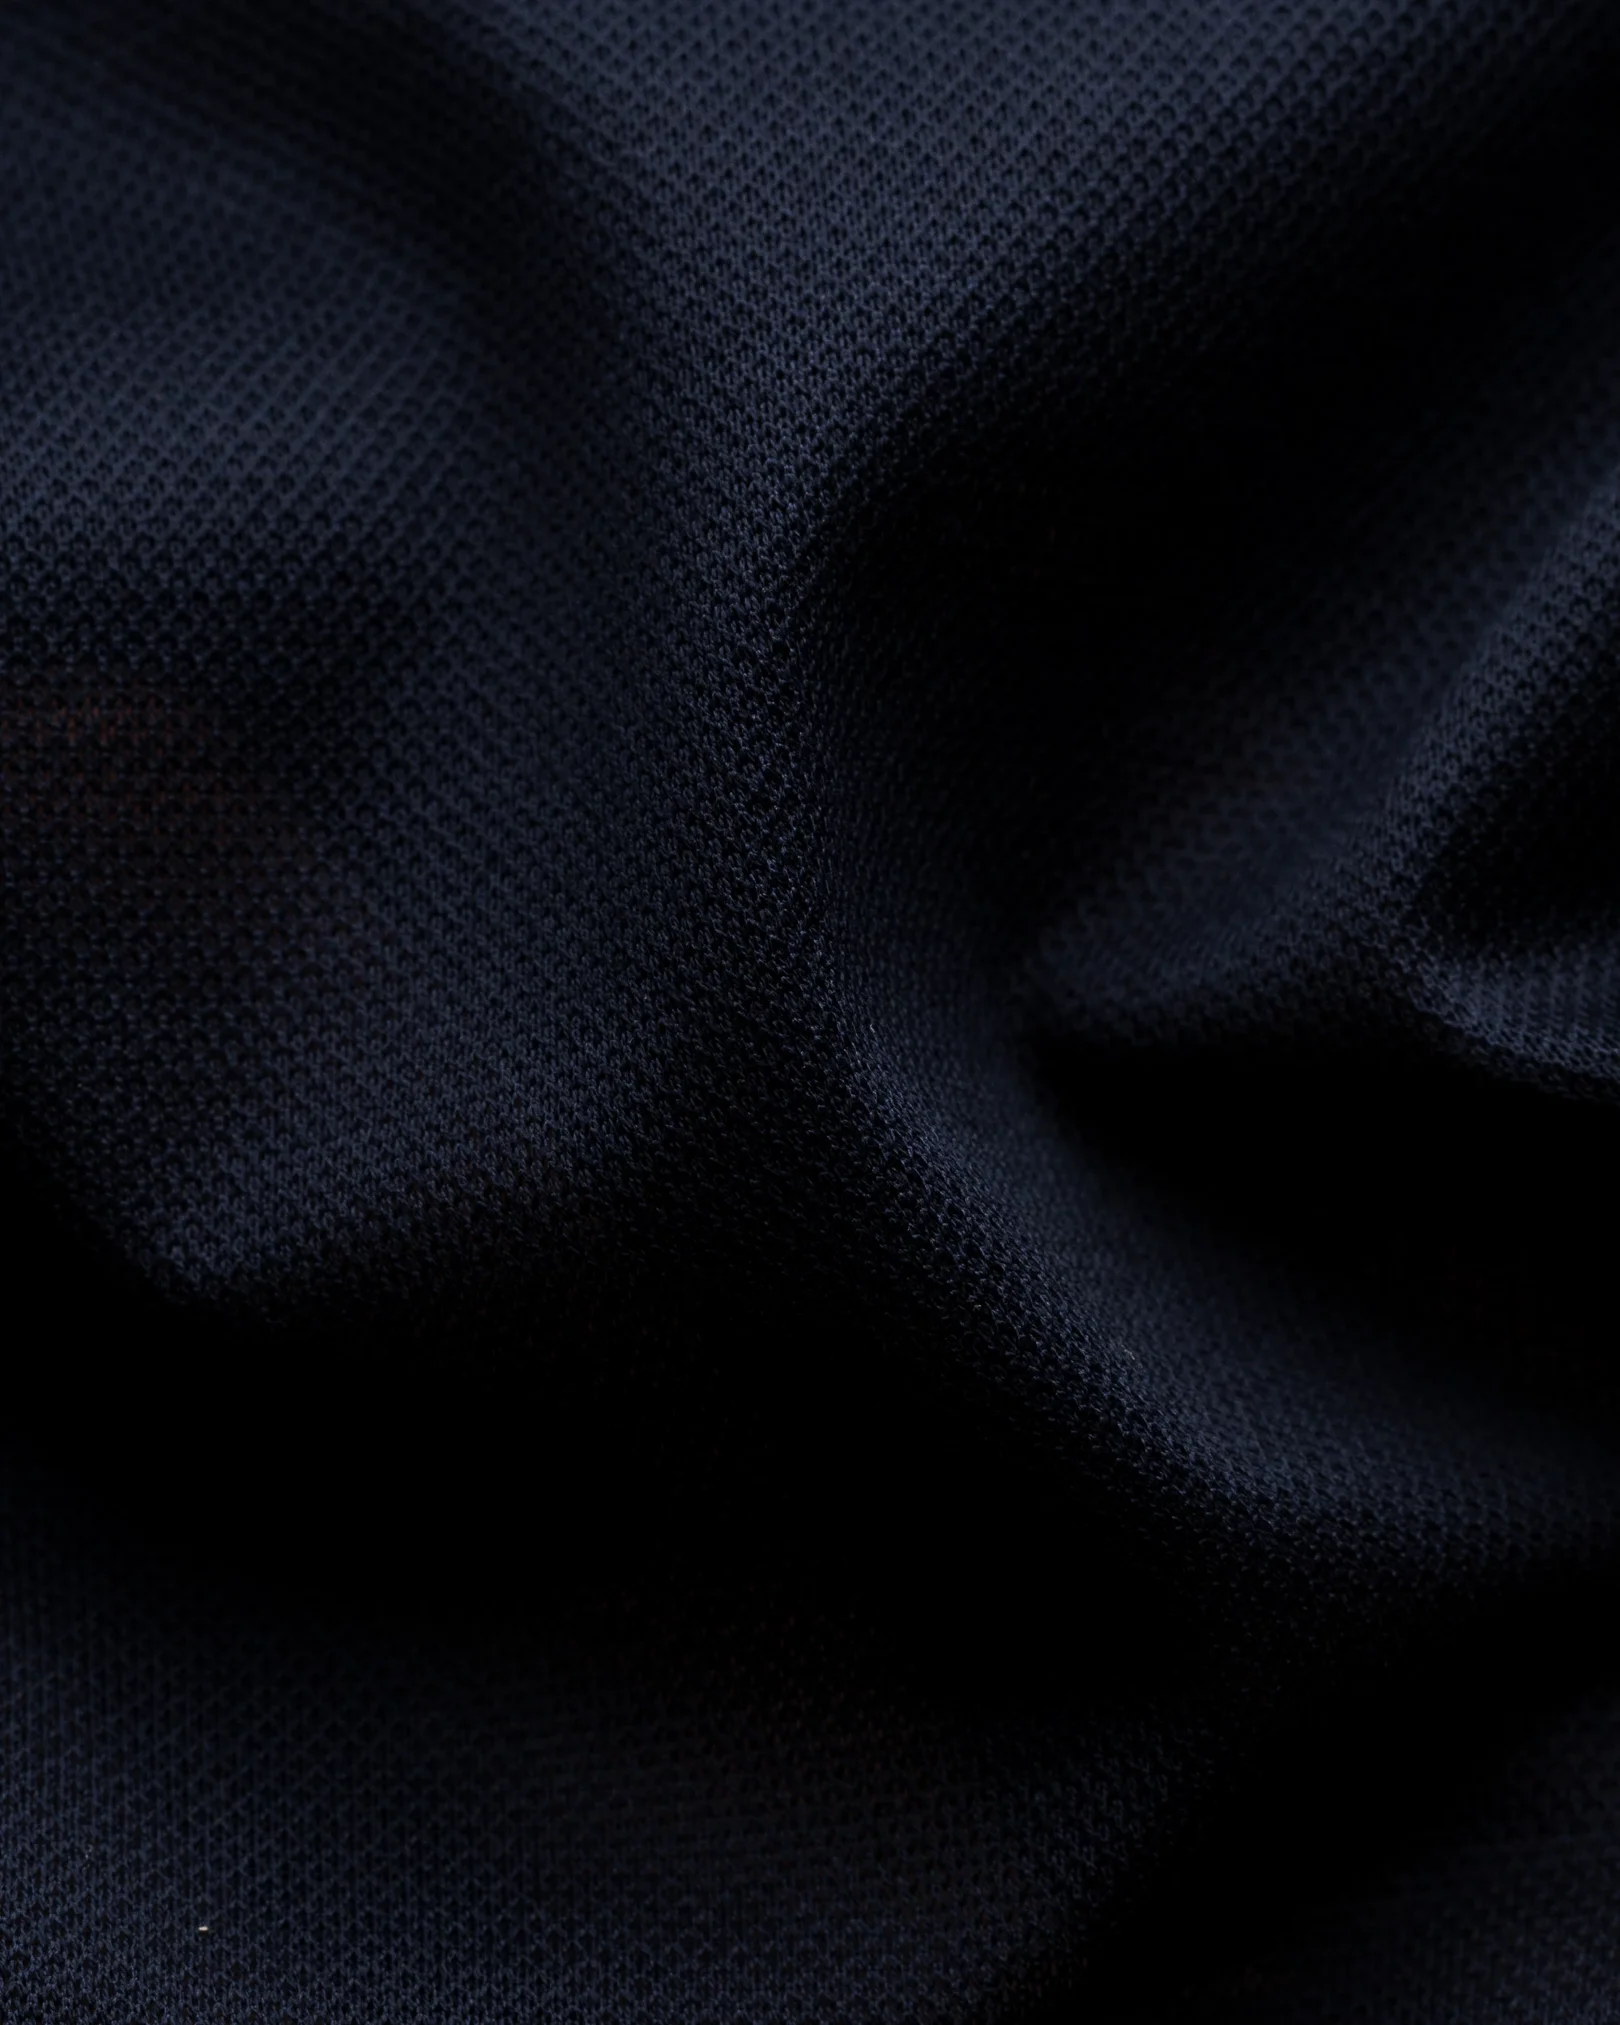 Eton - navy blue knit pique oxford